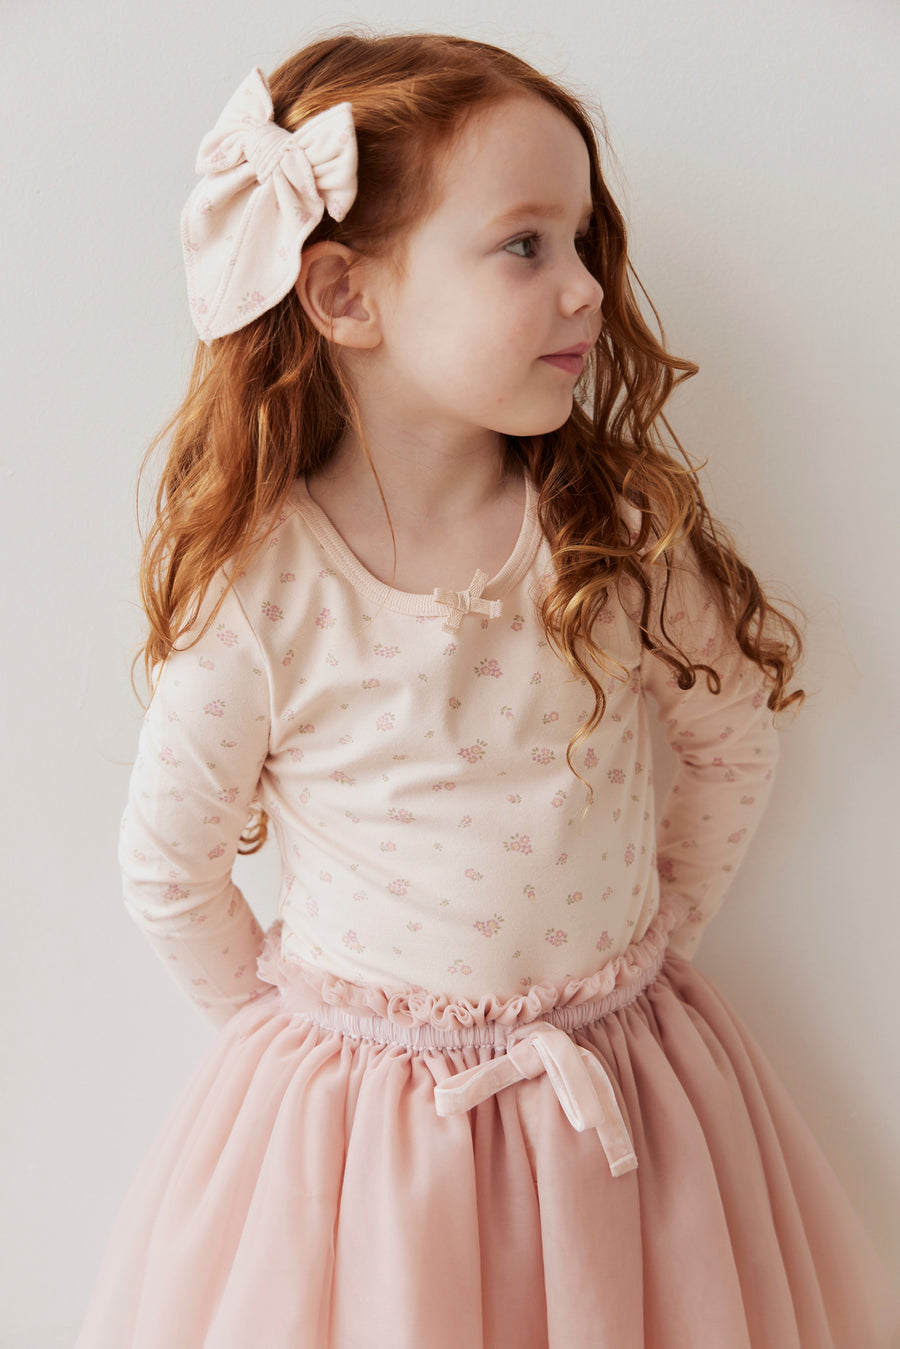 Organic Cotton Bridget Long Sleeve Top - Irina Shell Childrens Top from Jamie Kay NZ